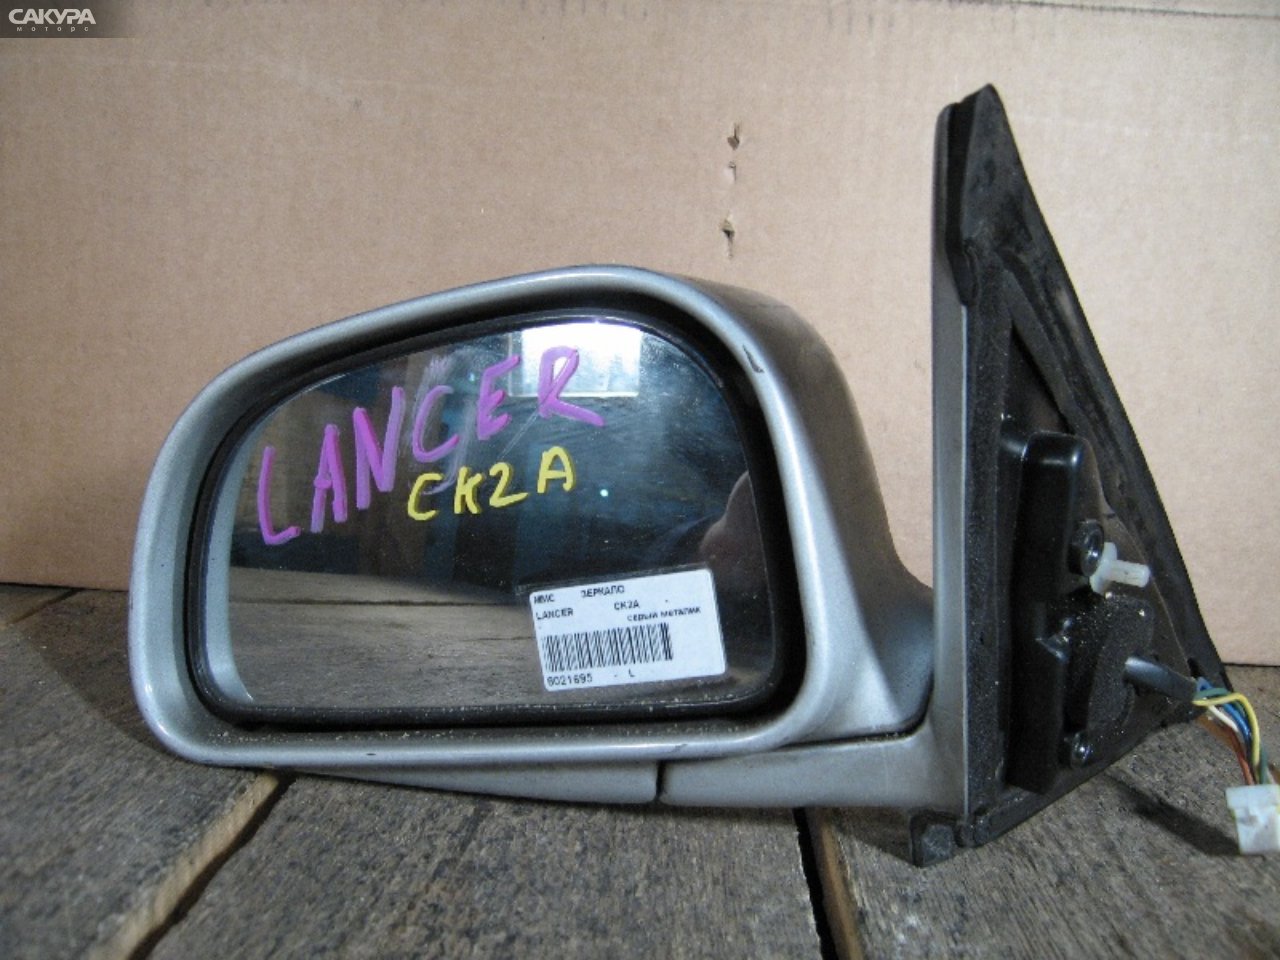 Зеркало боковое левое Mitsubishi Lancer CK2A: купить в Сакура Абакан.